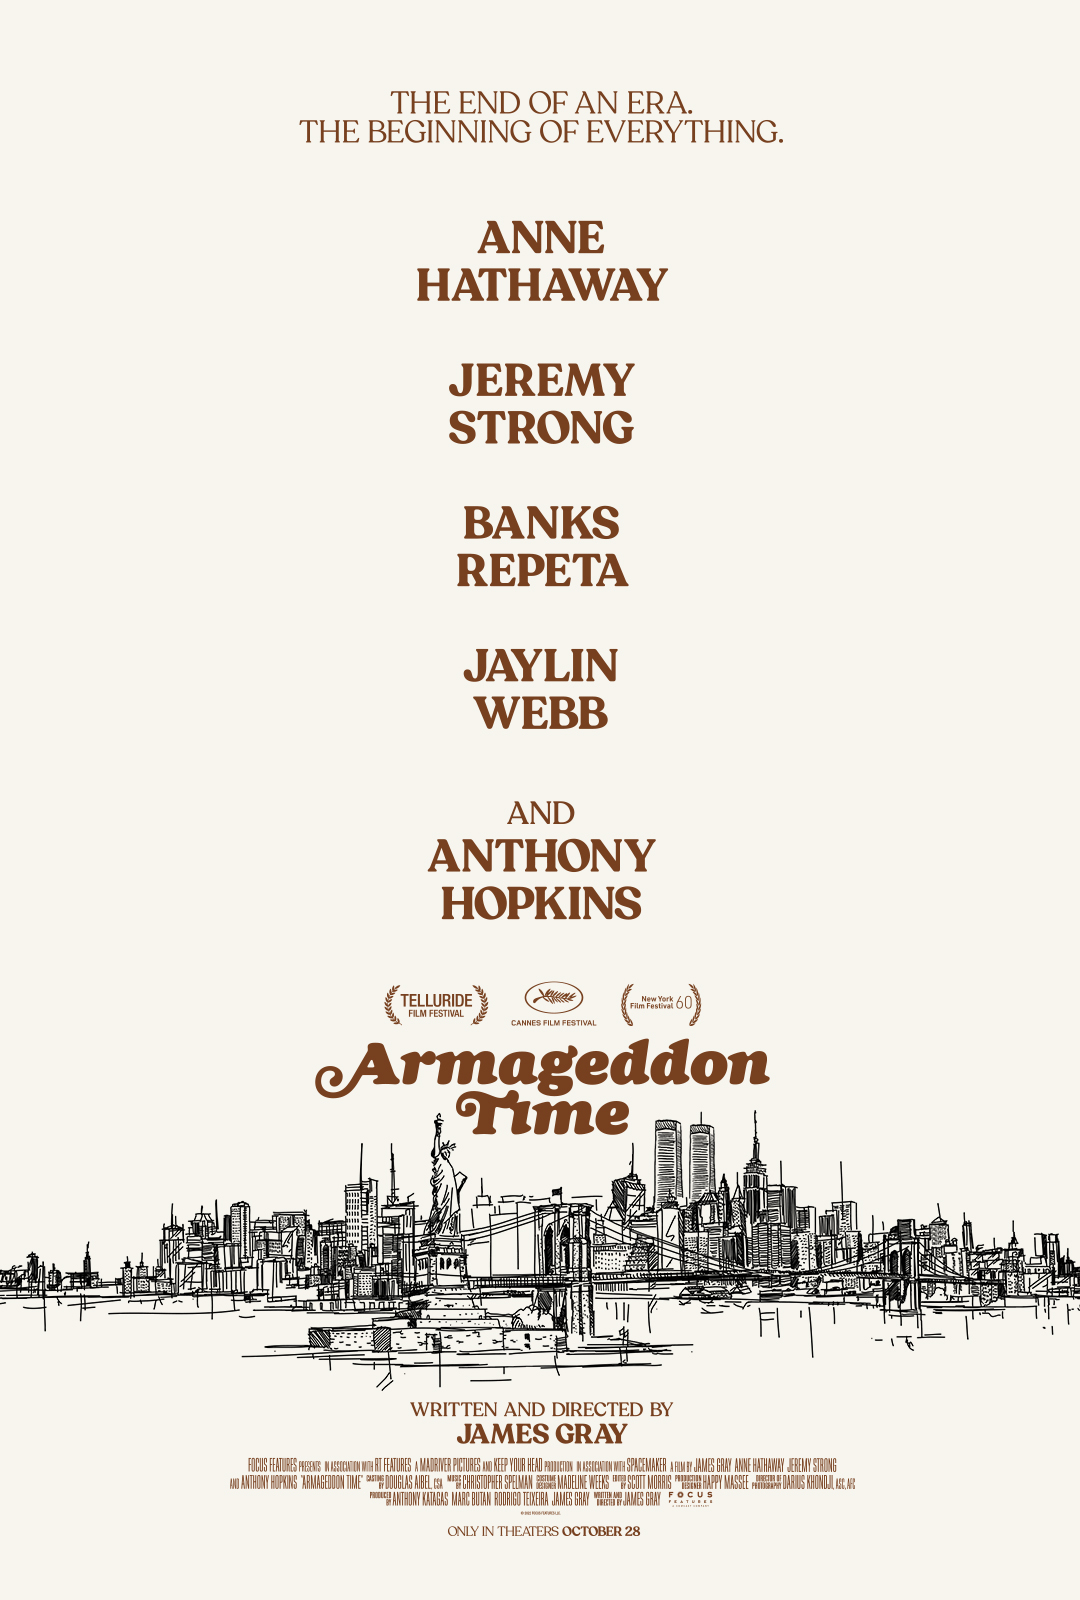 Promotional poster for ARMAGEDDON TIME